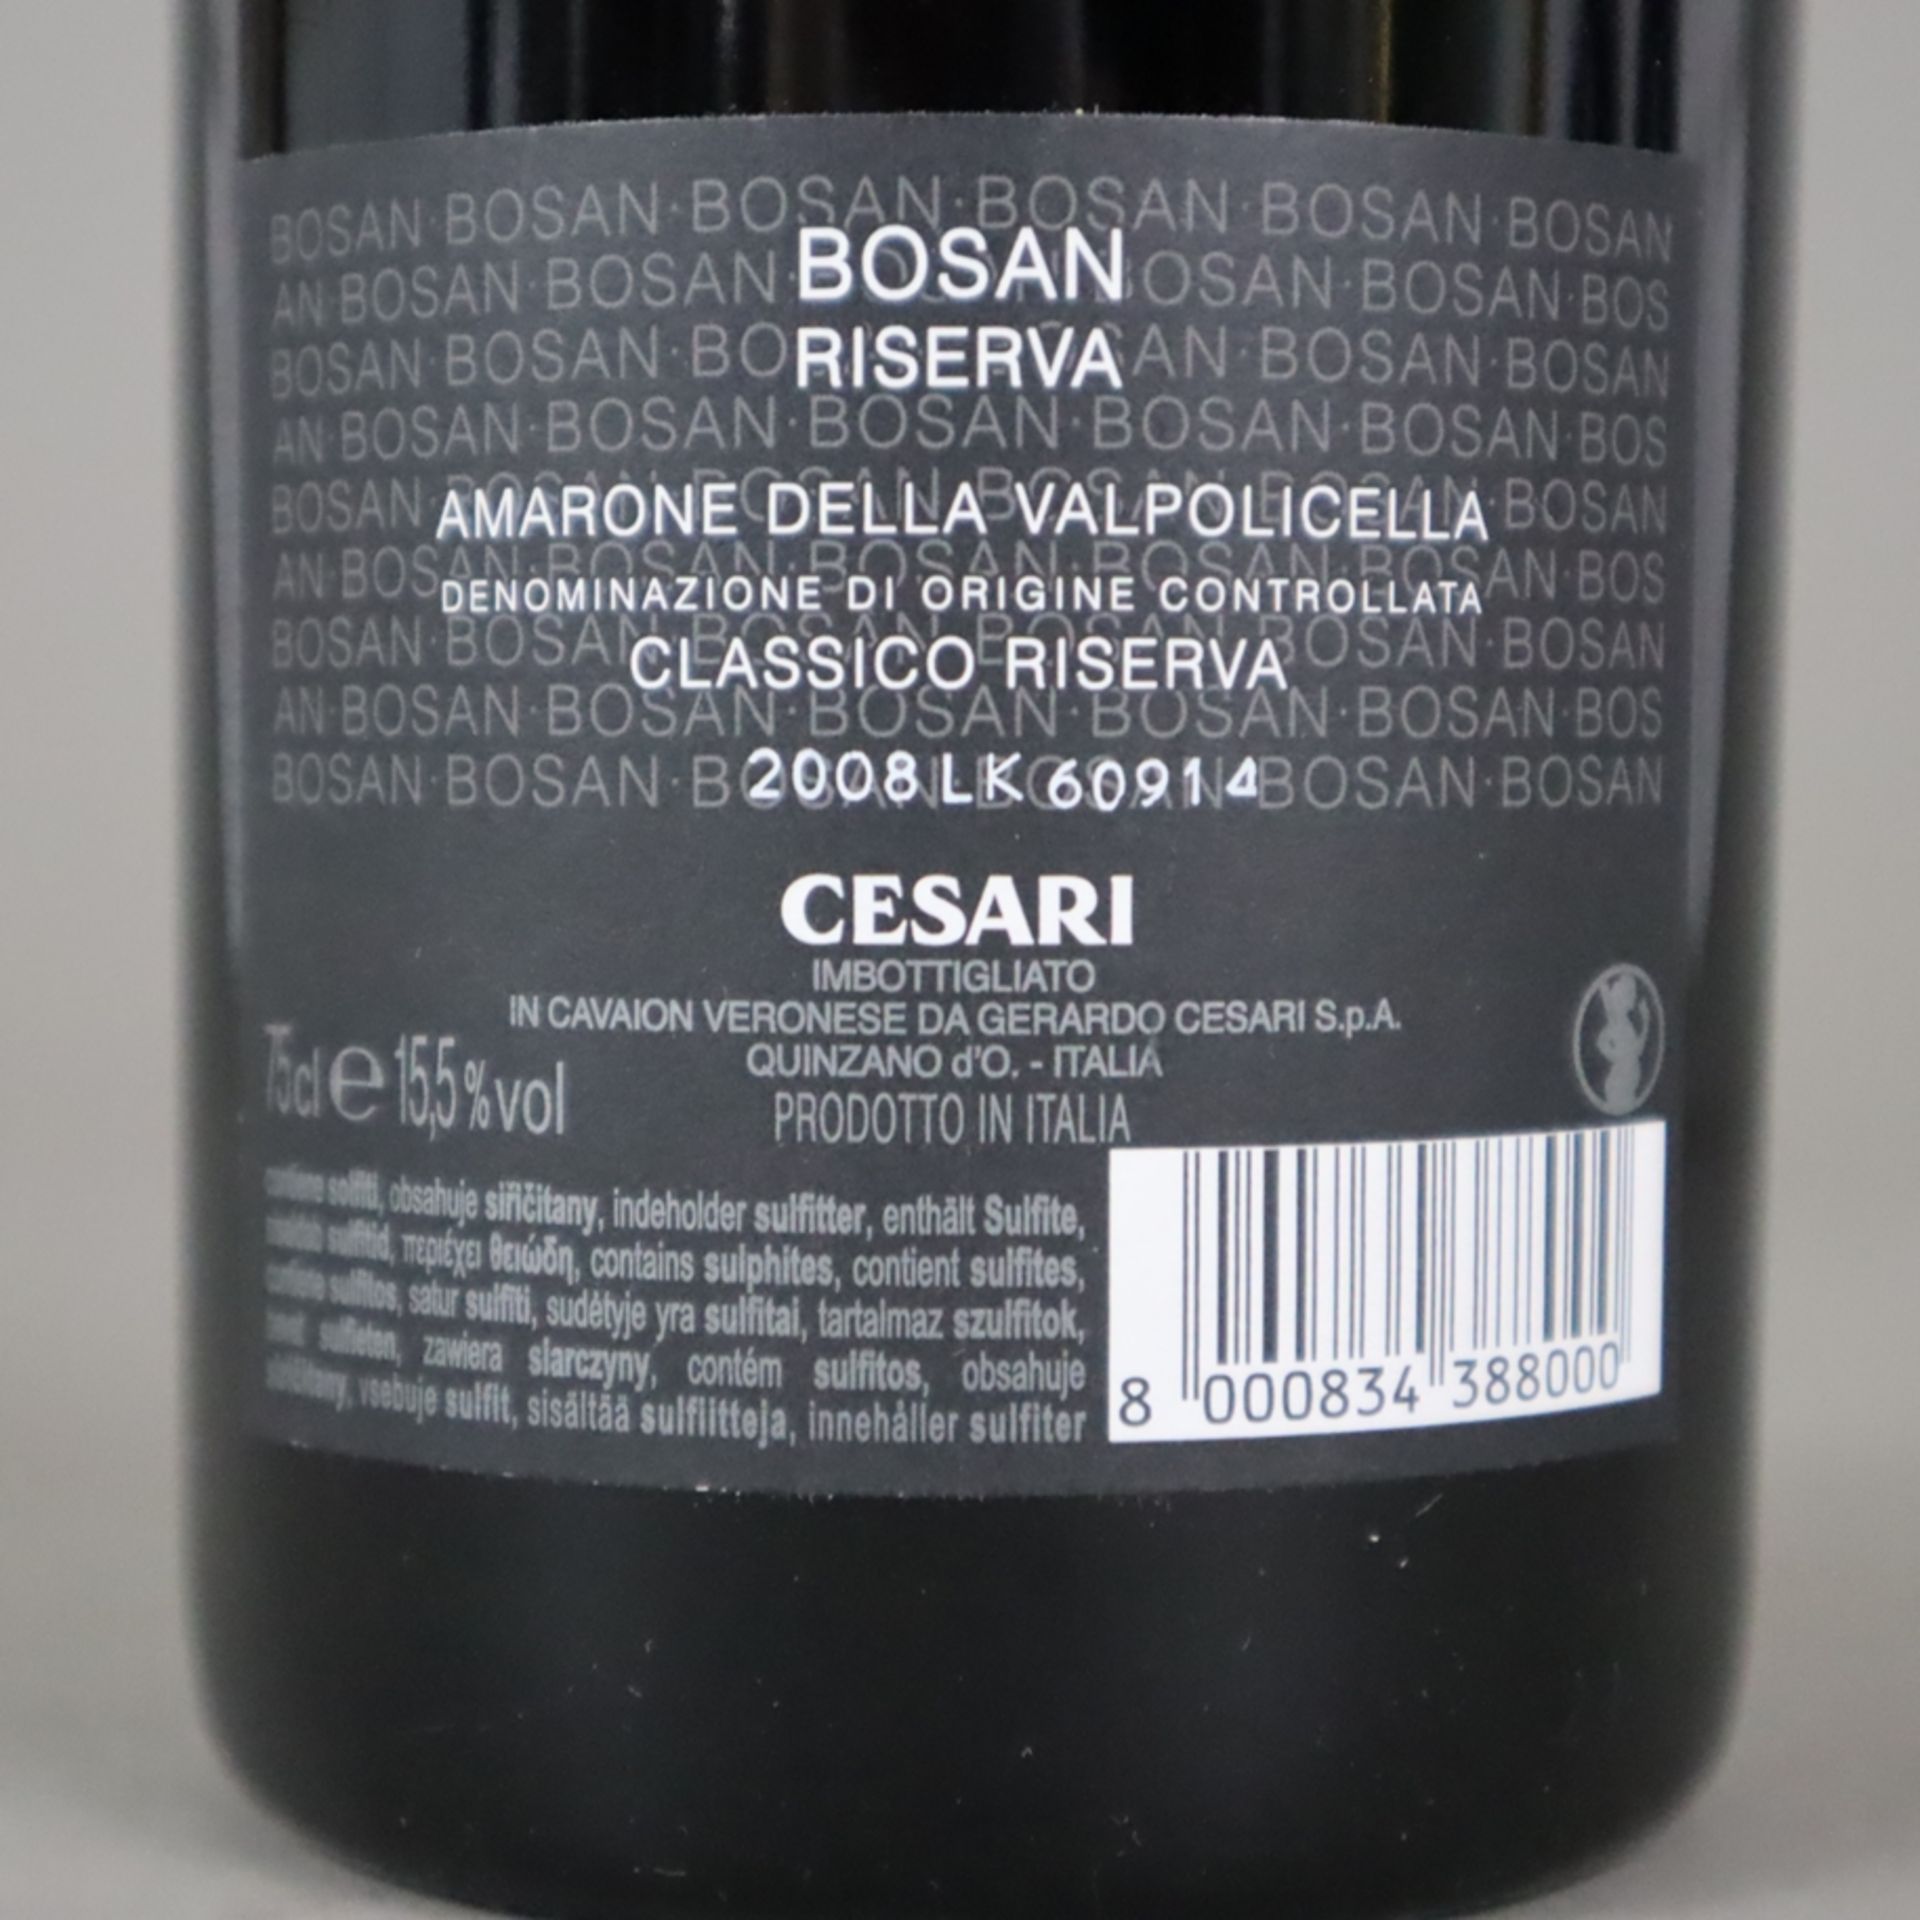 Weinkonvolut - 3 Flaschen, Cesari Amarone Bosan Riserva, Classico Riserva, Jahrgang 2008, 0,7 Liter - Image 4 of 4